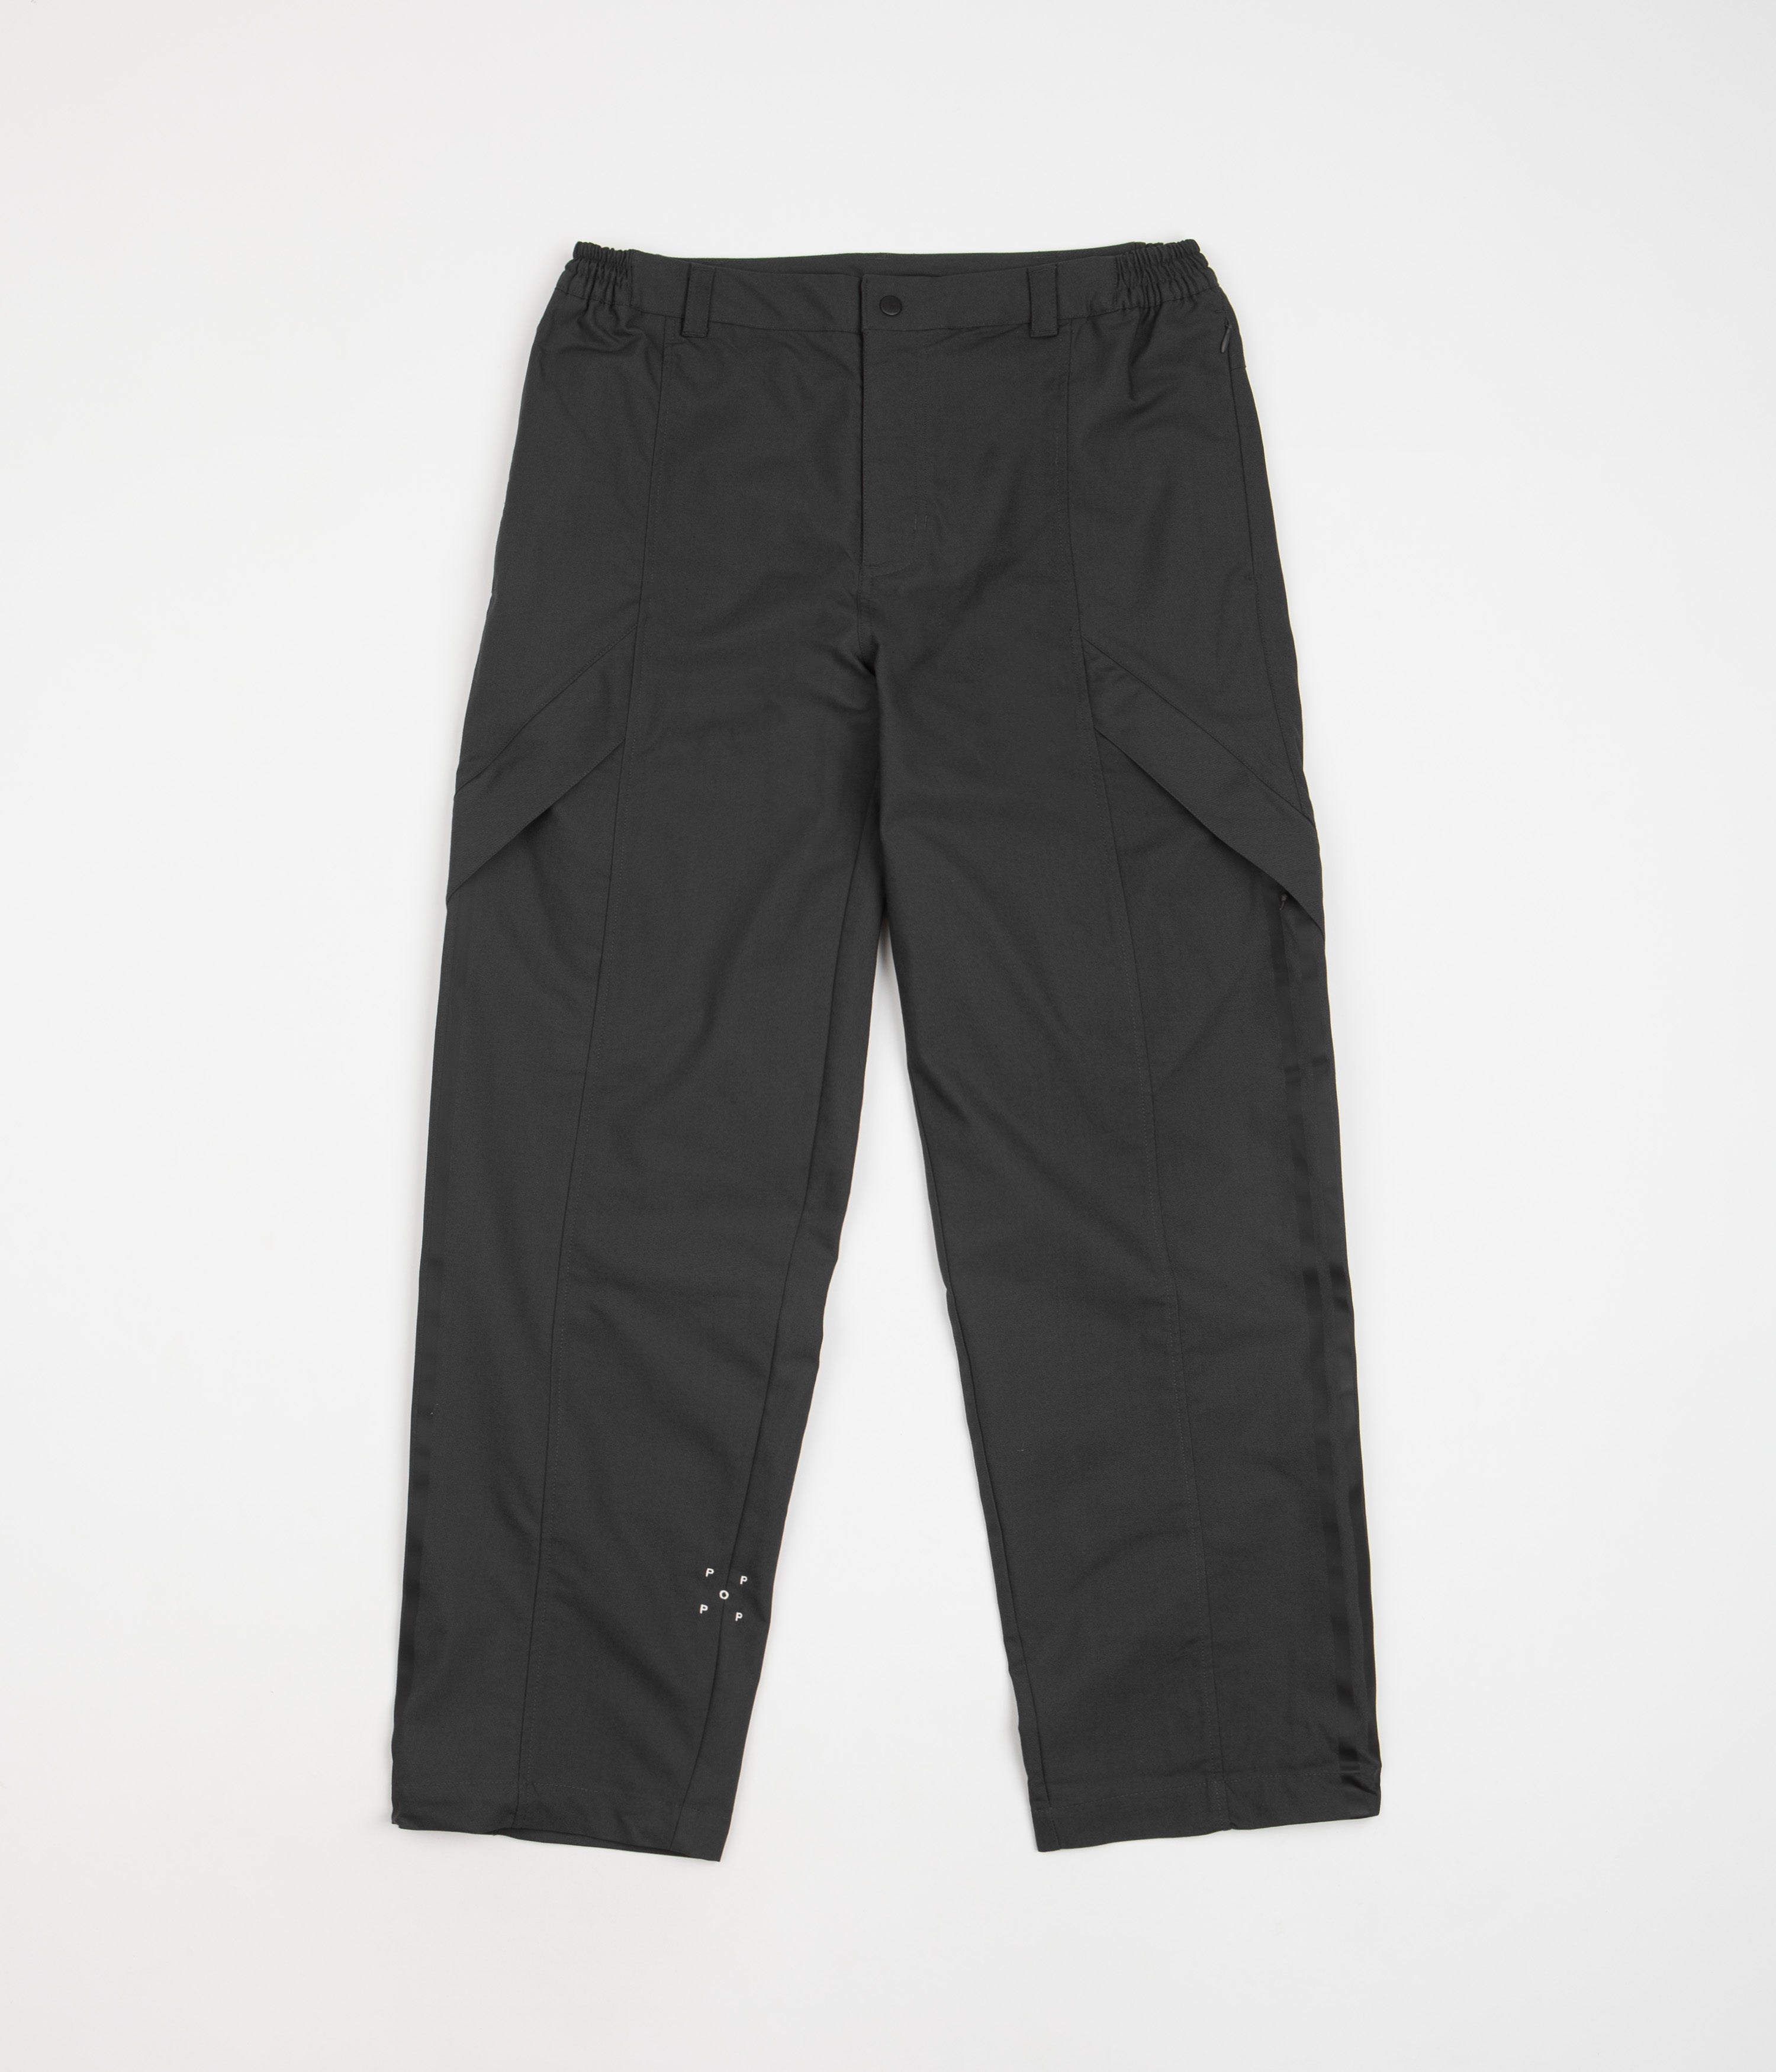 Hugo Boss Men's Tapered Fit Chino Pants, Carbon Black-Size 29/34 | eBay